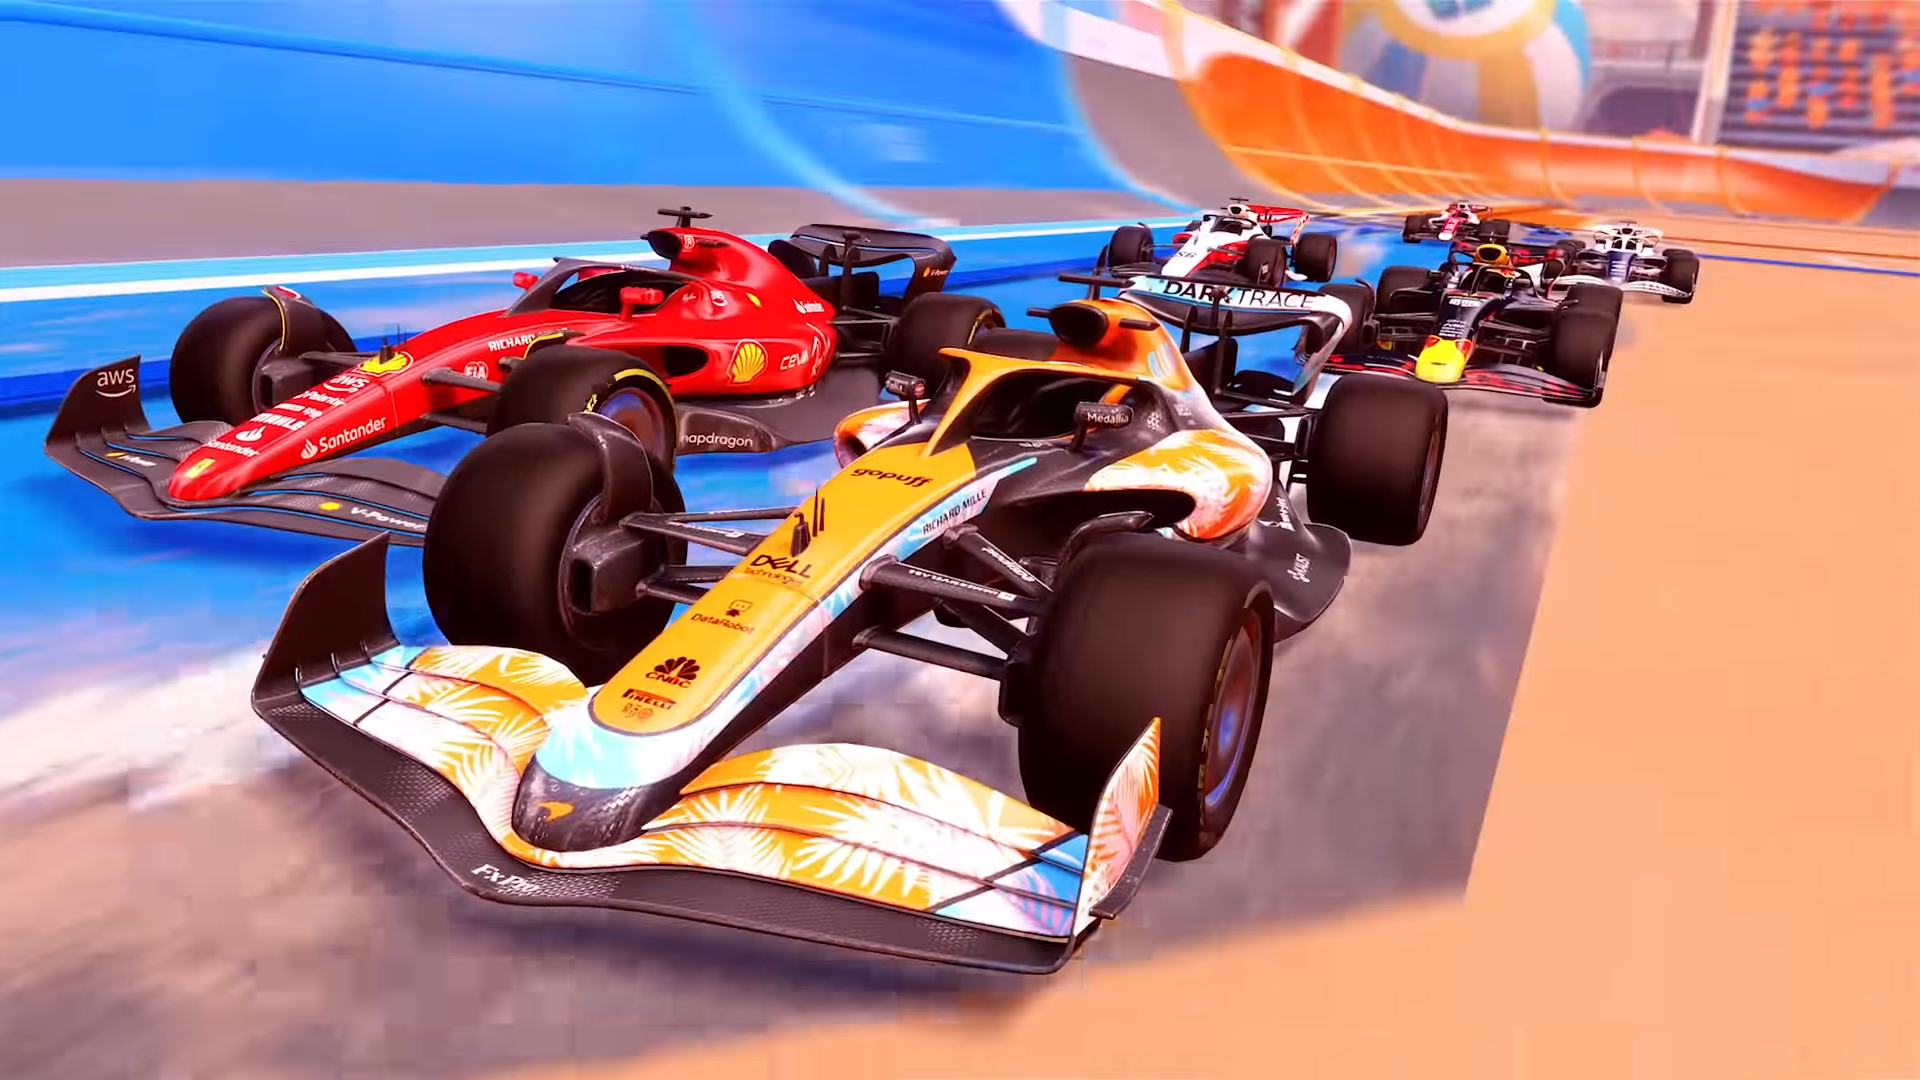 https://s1.cdn.autoevolution.com/images/news/rocket-league-announces-2022-formula-1-fan-pass-featuring-new-car-decals-and-wheels-187615_1.jpg